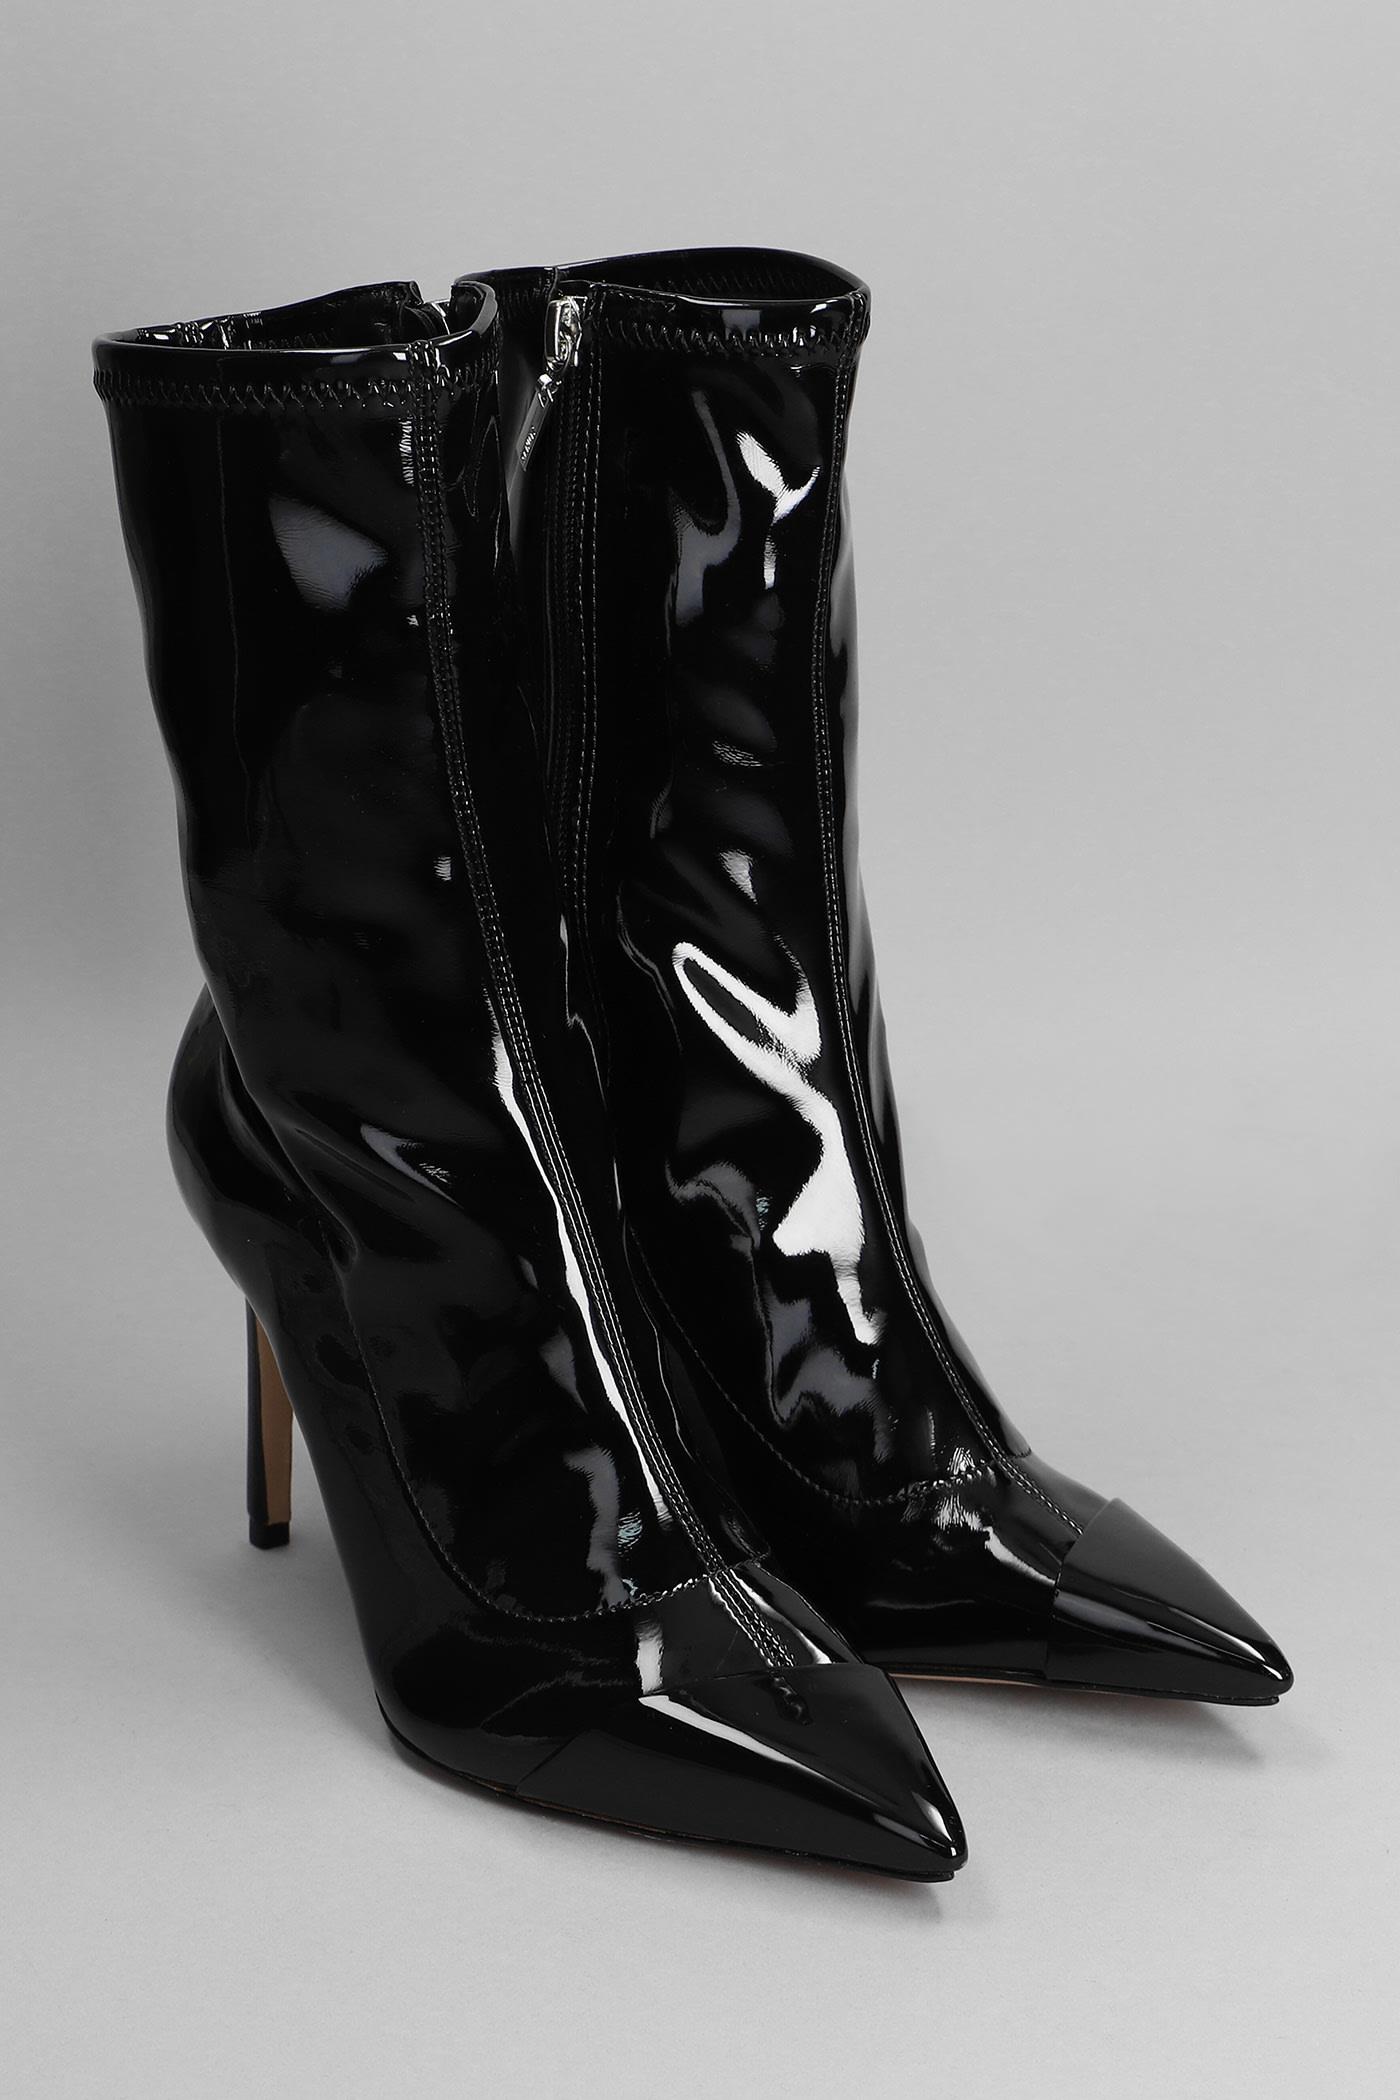 The Esatto | Italian Nappa Leather Pump Heel in Black Patent | M.Gemi